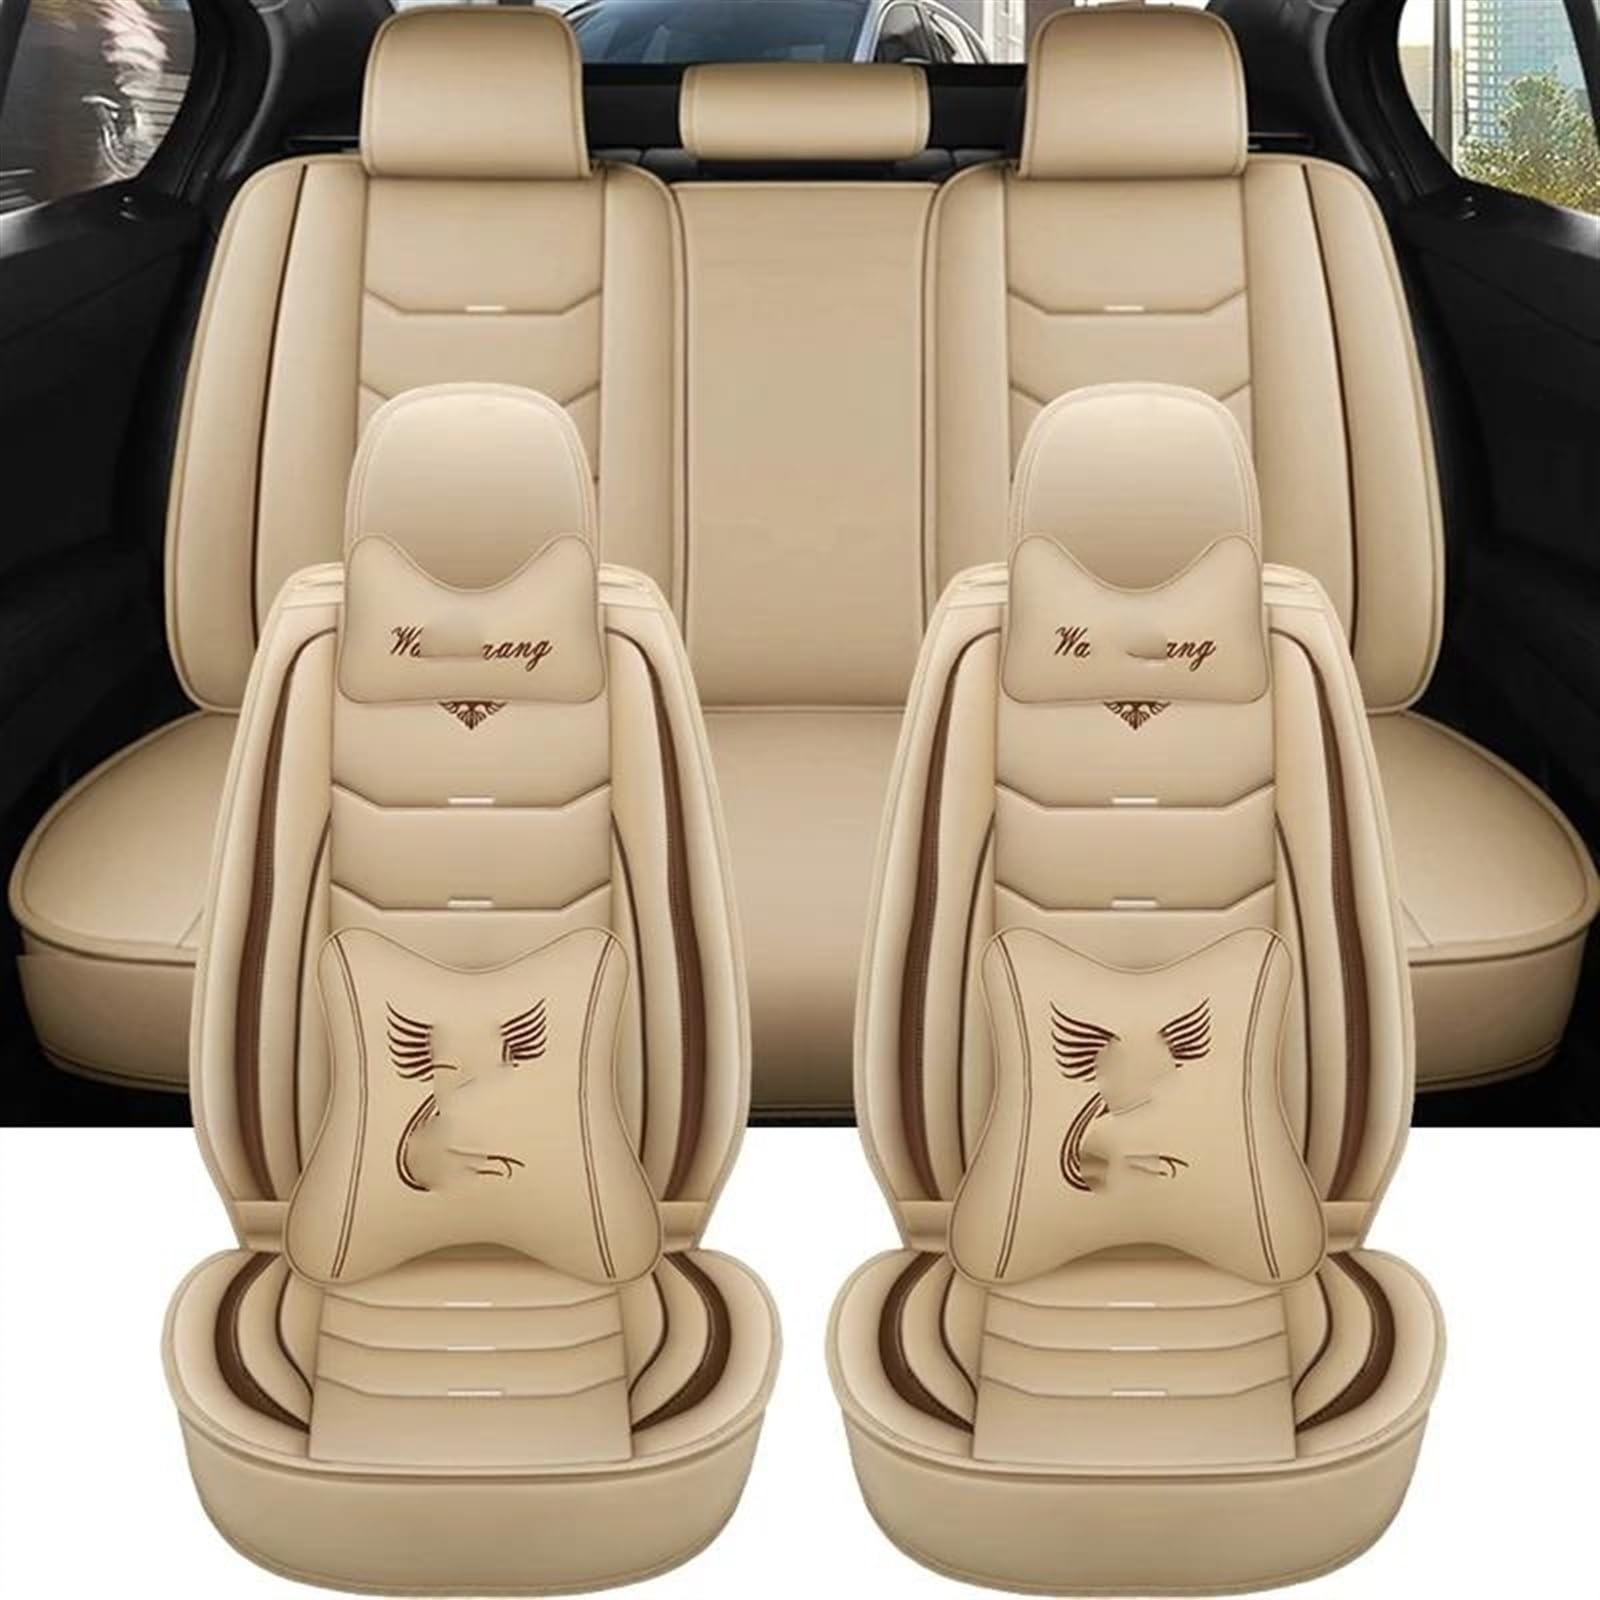 Kompatibel Mit E60 Für F30 E46 E36 E39 E30 5 Sitzplätze Universal-Autositzbezug Innenbezüge Für Vordersitze Rückbank-Sitzbezug-Schutz Schonbezug Autositz(5,color1) von MINBAV